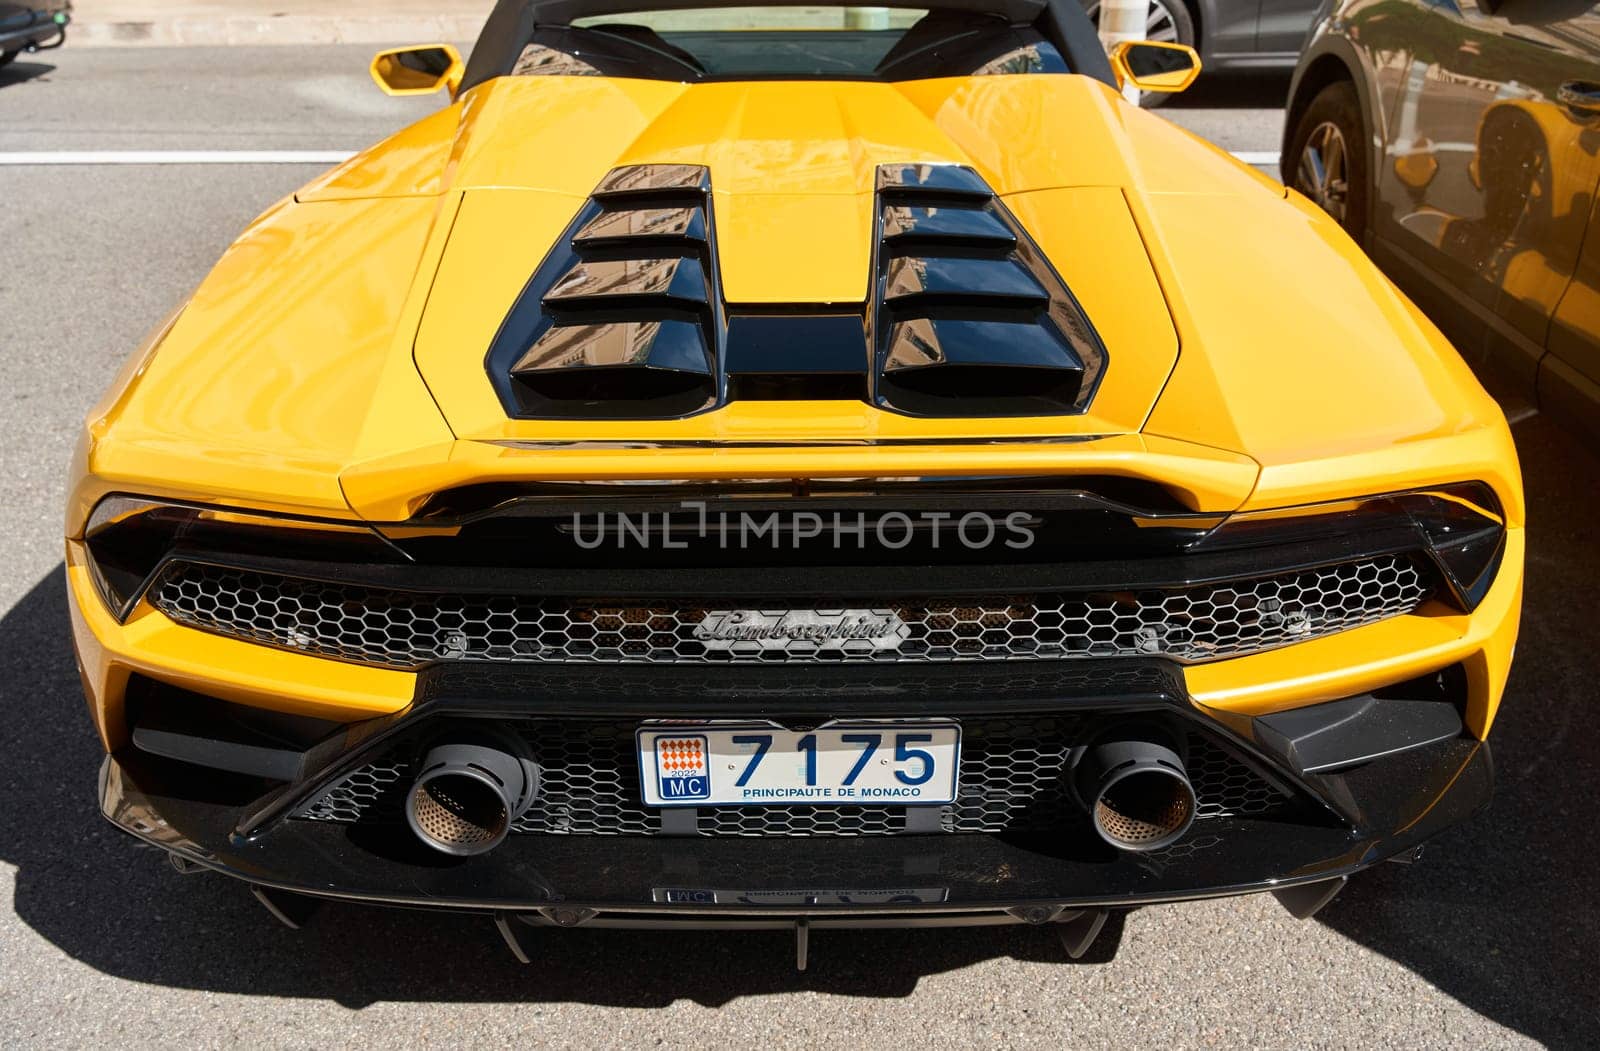 Monaco, Monte Carlo, 29 September 2022 - Close-up view of yellow sports car Lamborghini on street by vladimirdrozdin